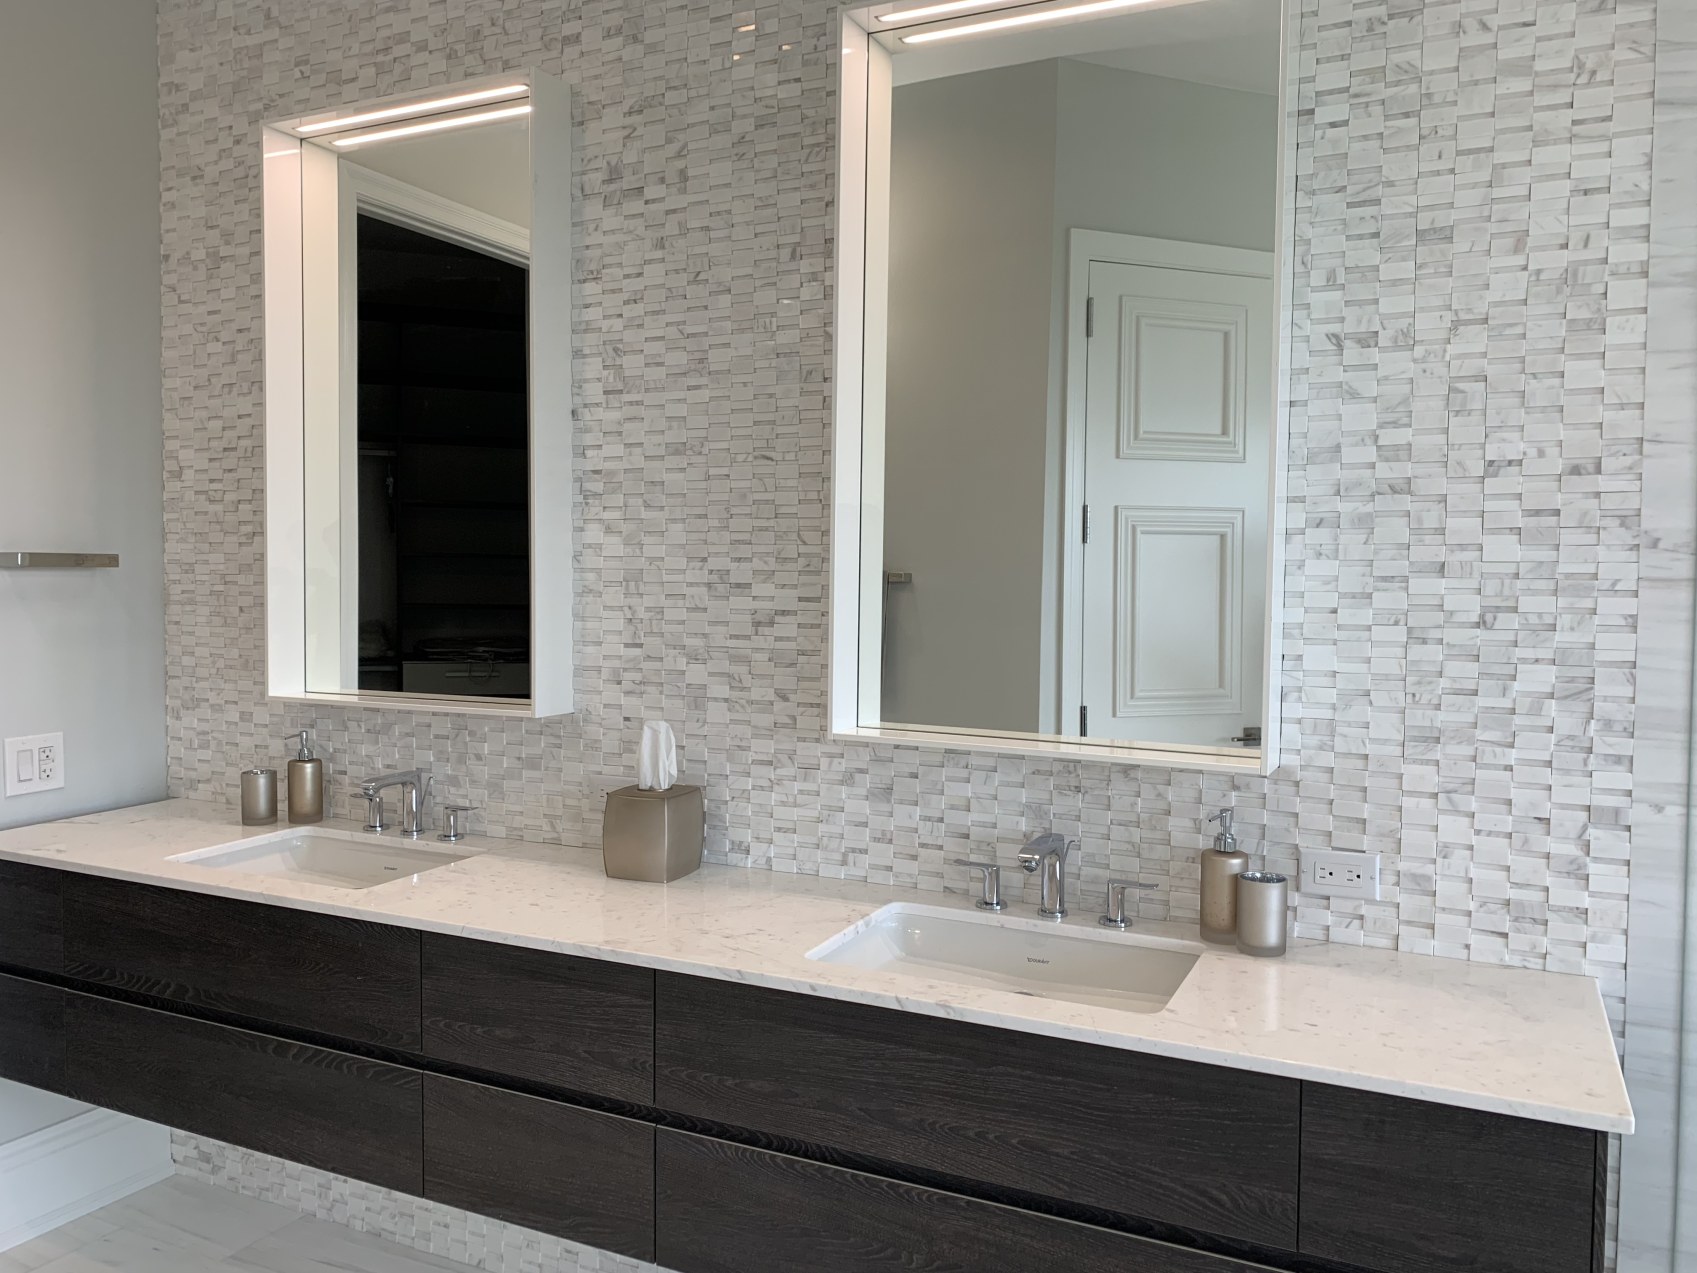 Double floating vanity with mosaic backsplash in master bathroom